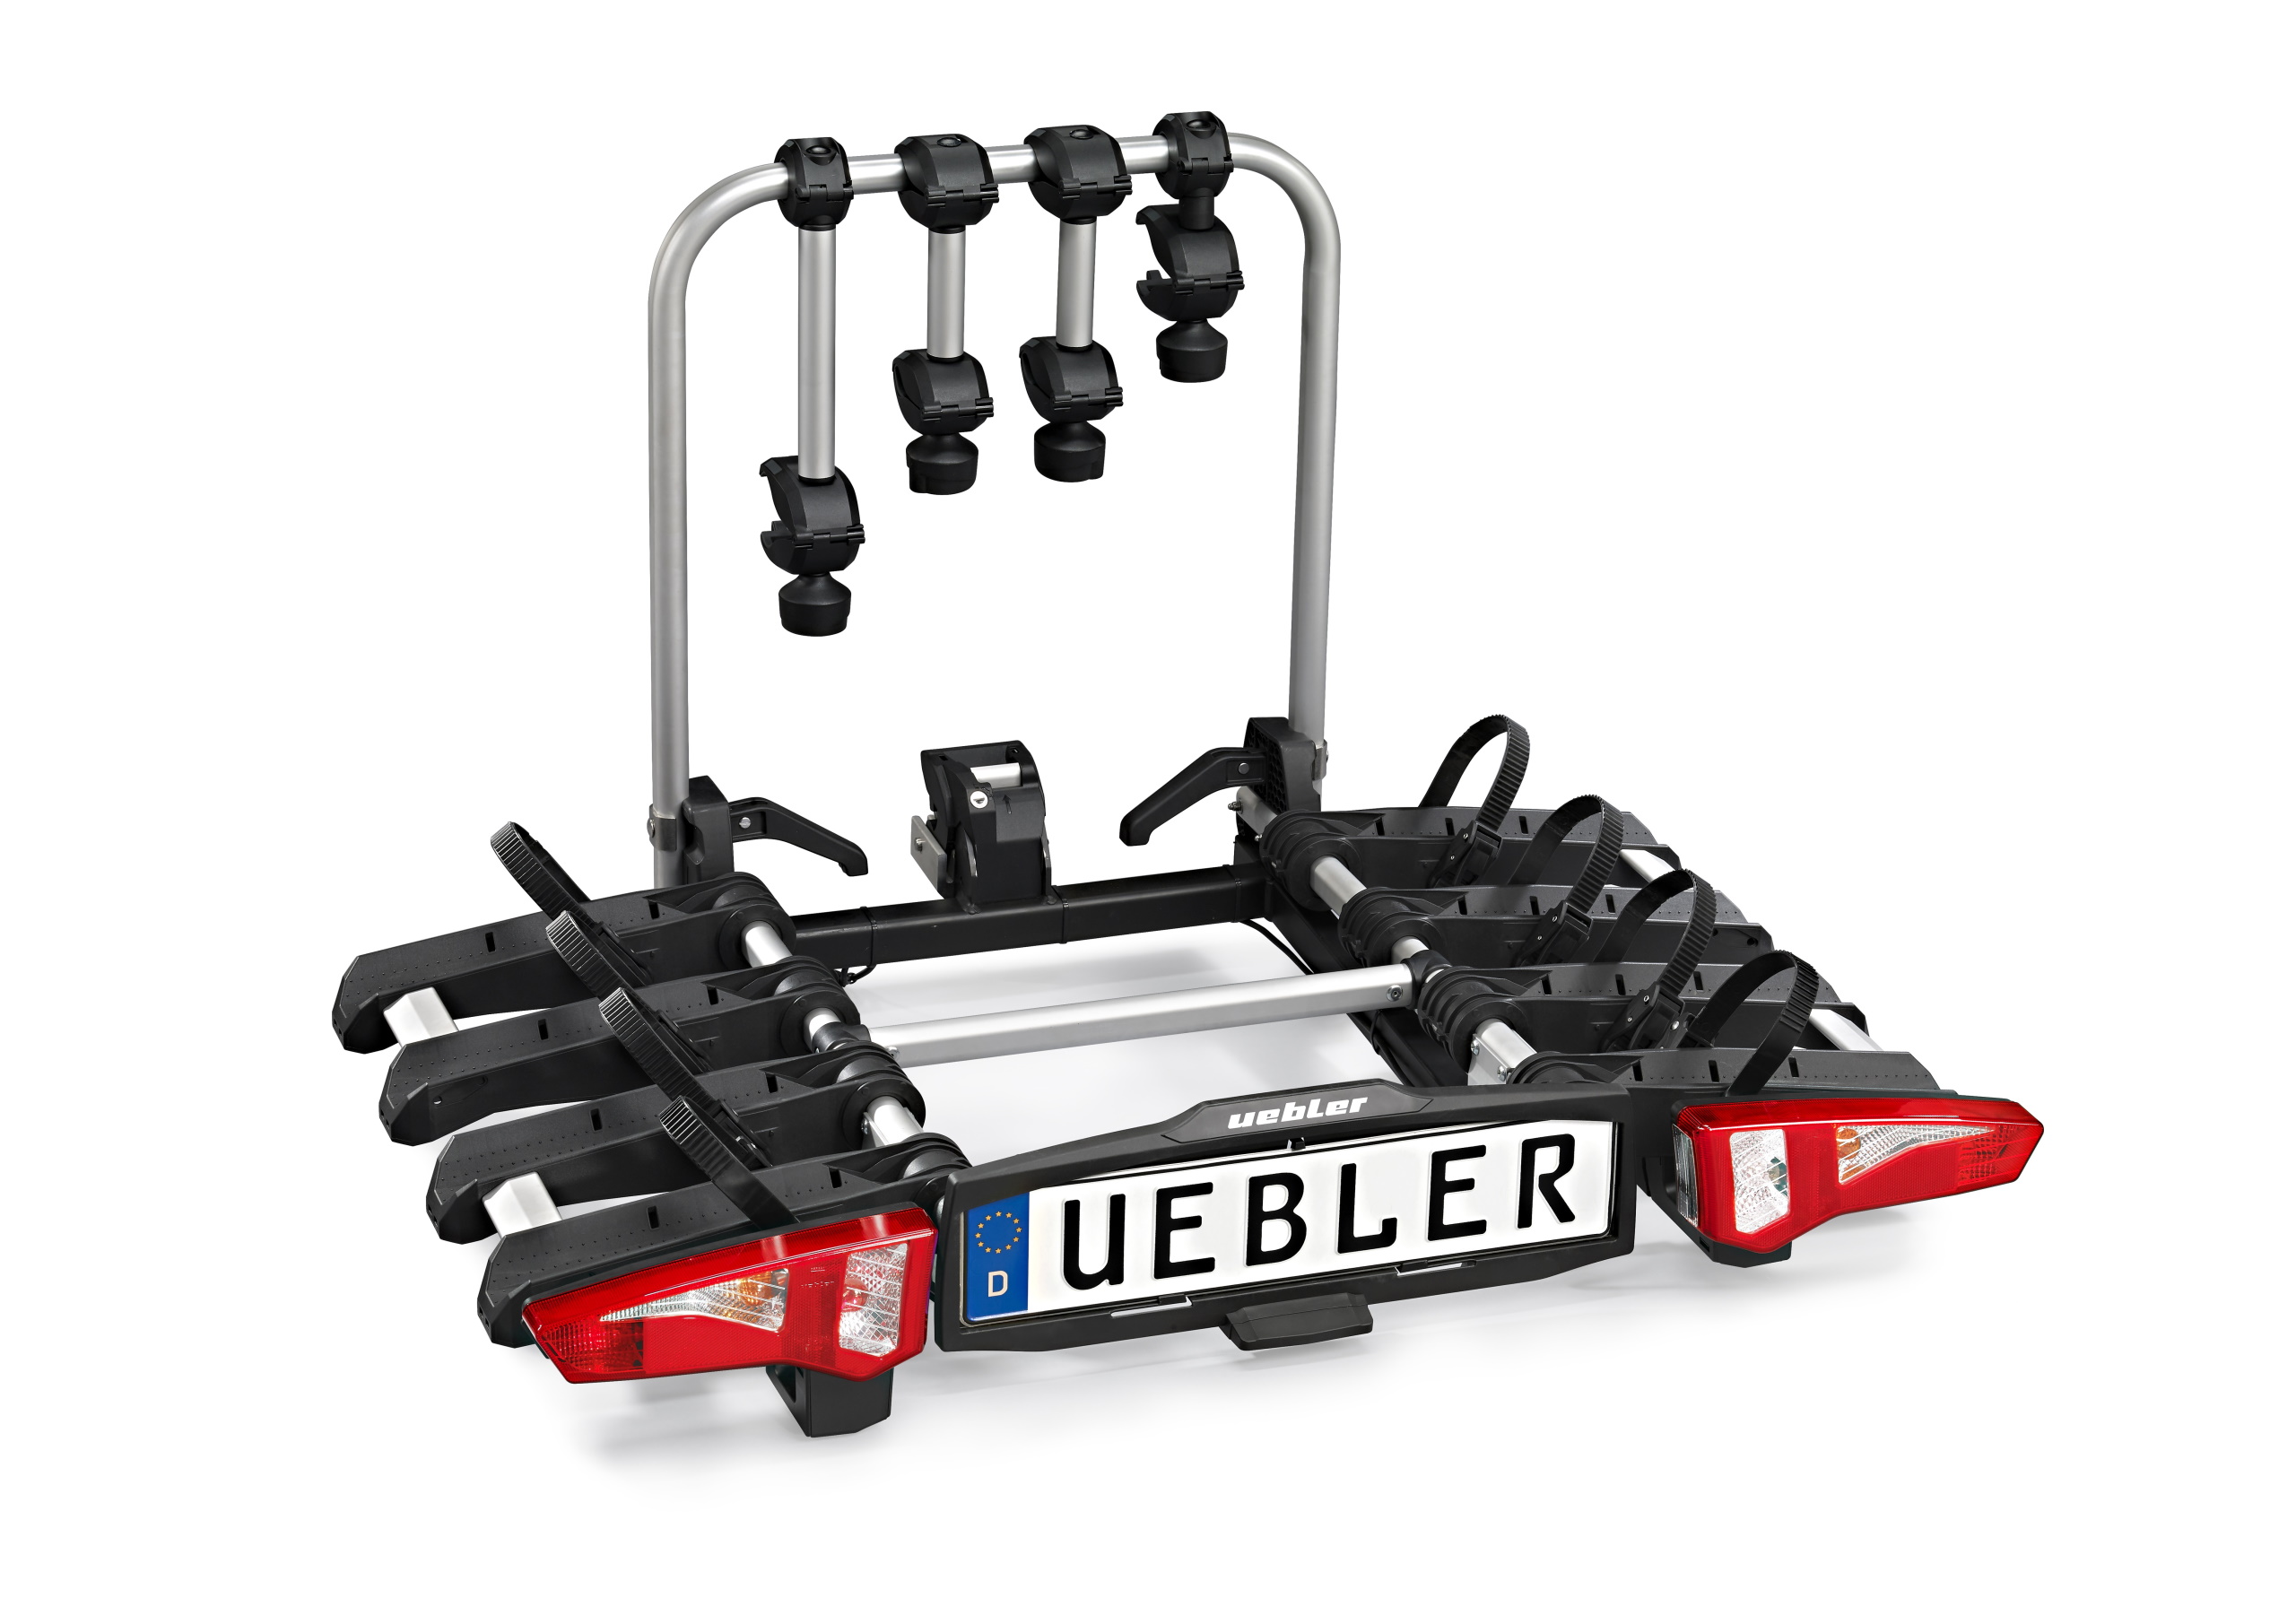 :Uebler i41S tilting and folding bike rack (4 bikes) 18140